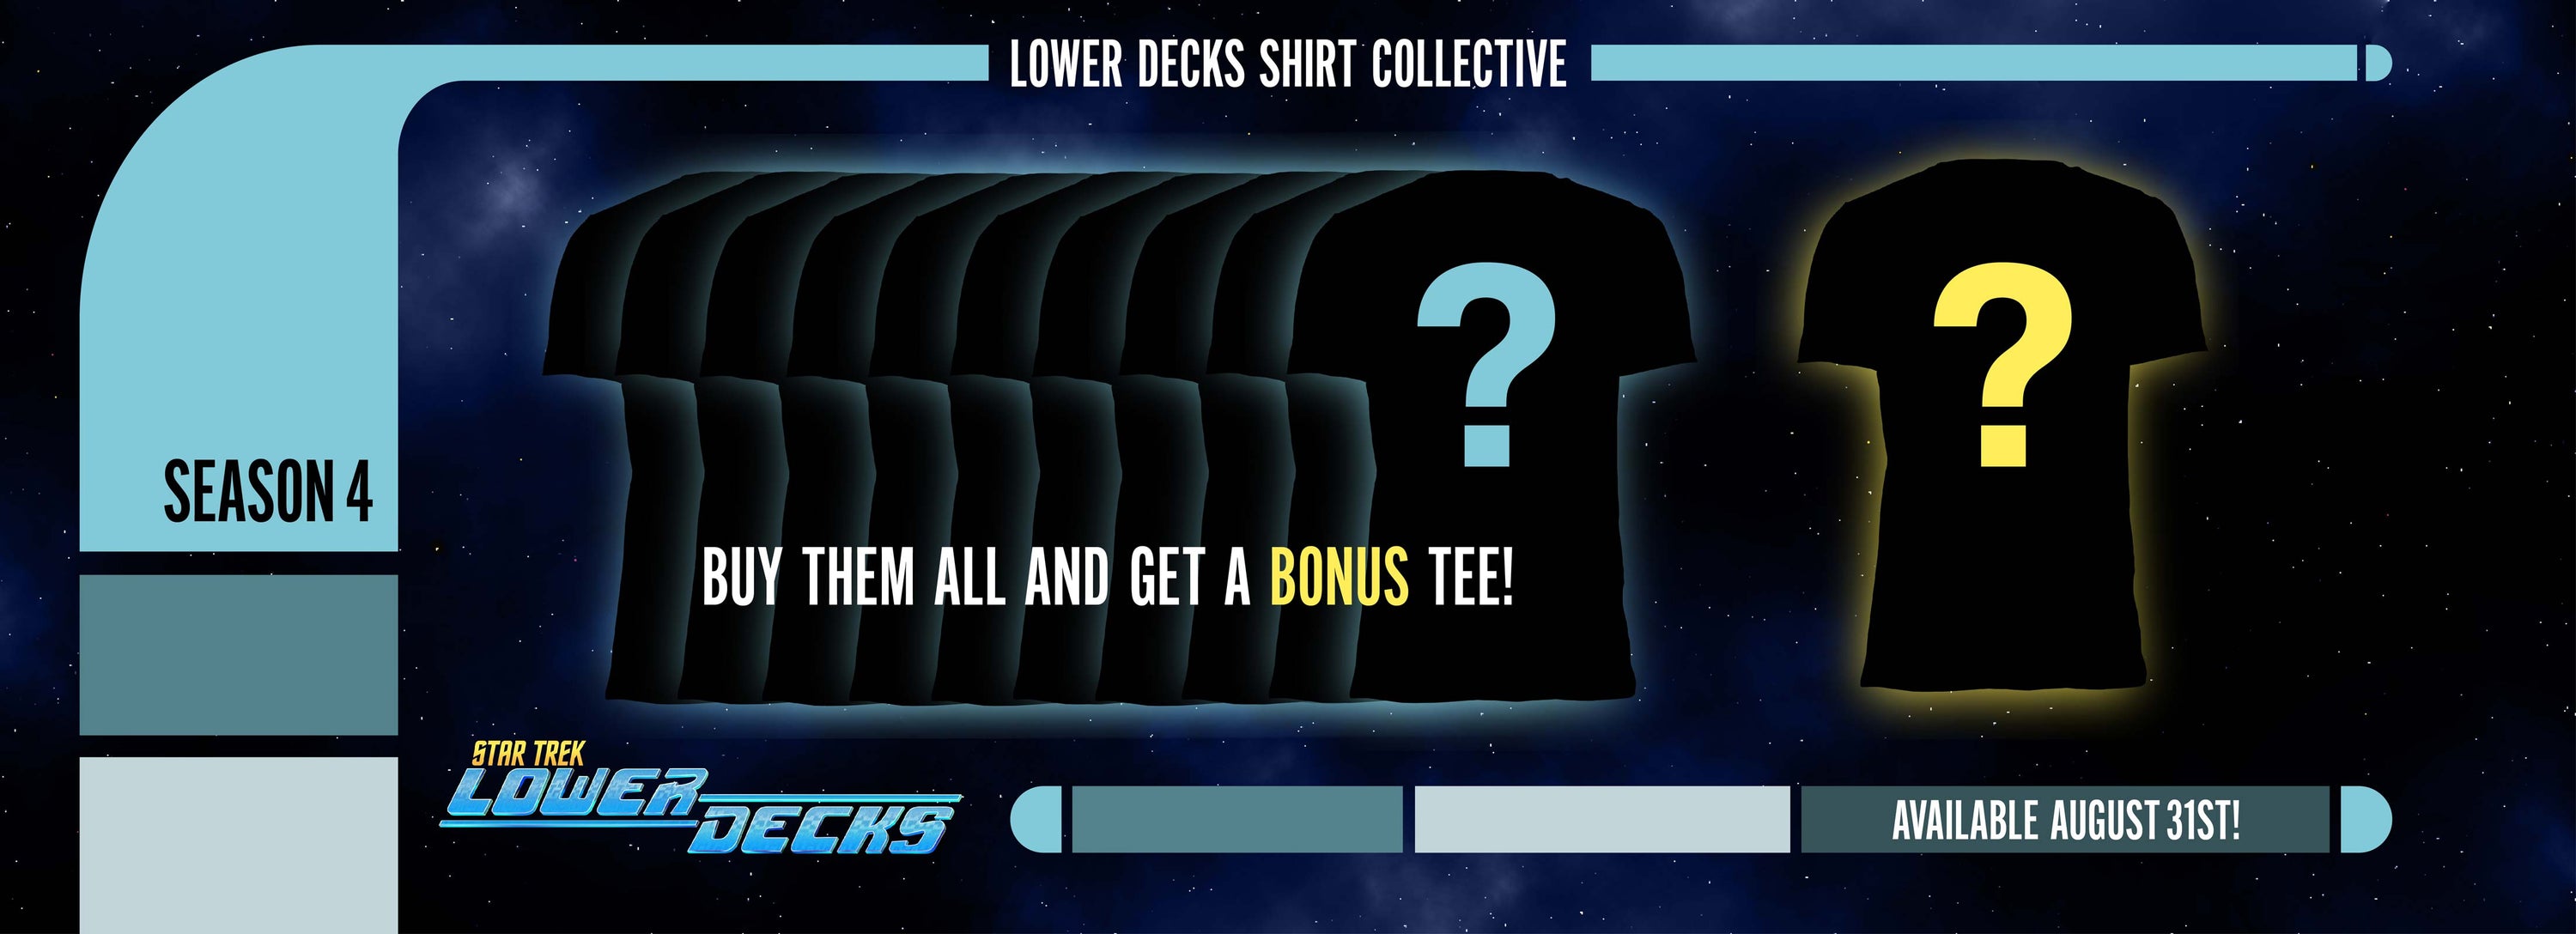 Star Trek Lower Decks Season 4 T-shirt Collective